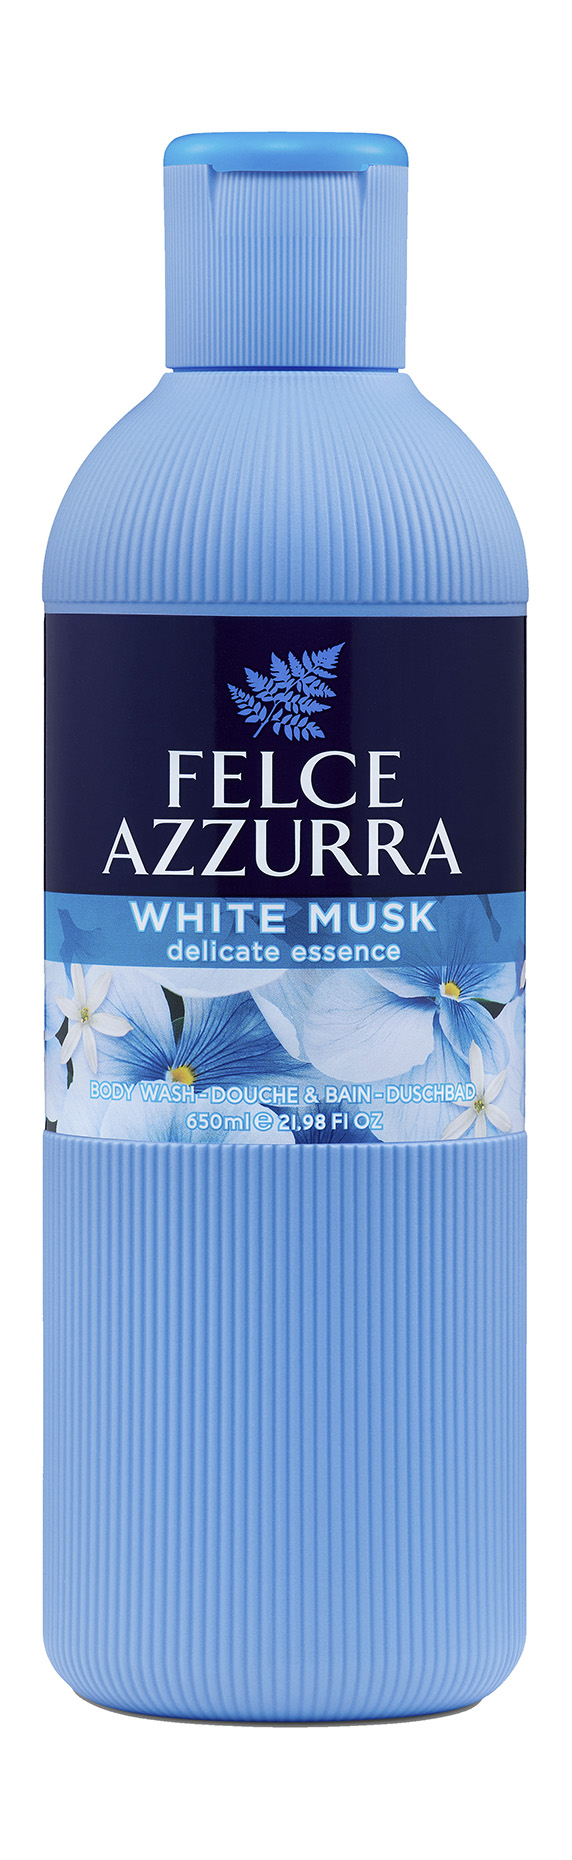 Гель для душа Felce Azzurra White Musk Delicate Essence парфюмированный, 650 мл гель для душа le jardin парфюмированный орхидея и лилия 500 мл